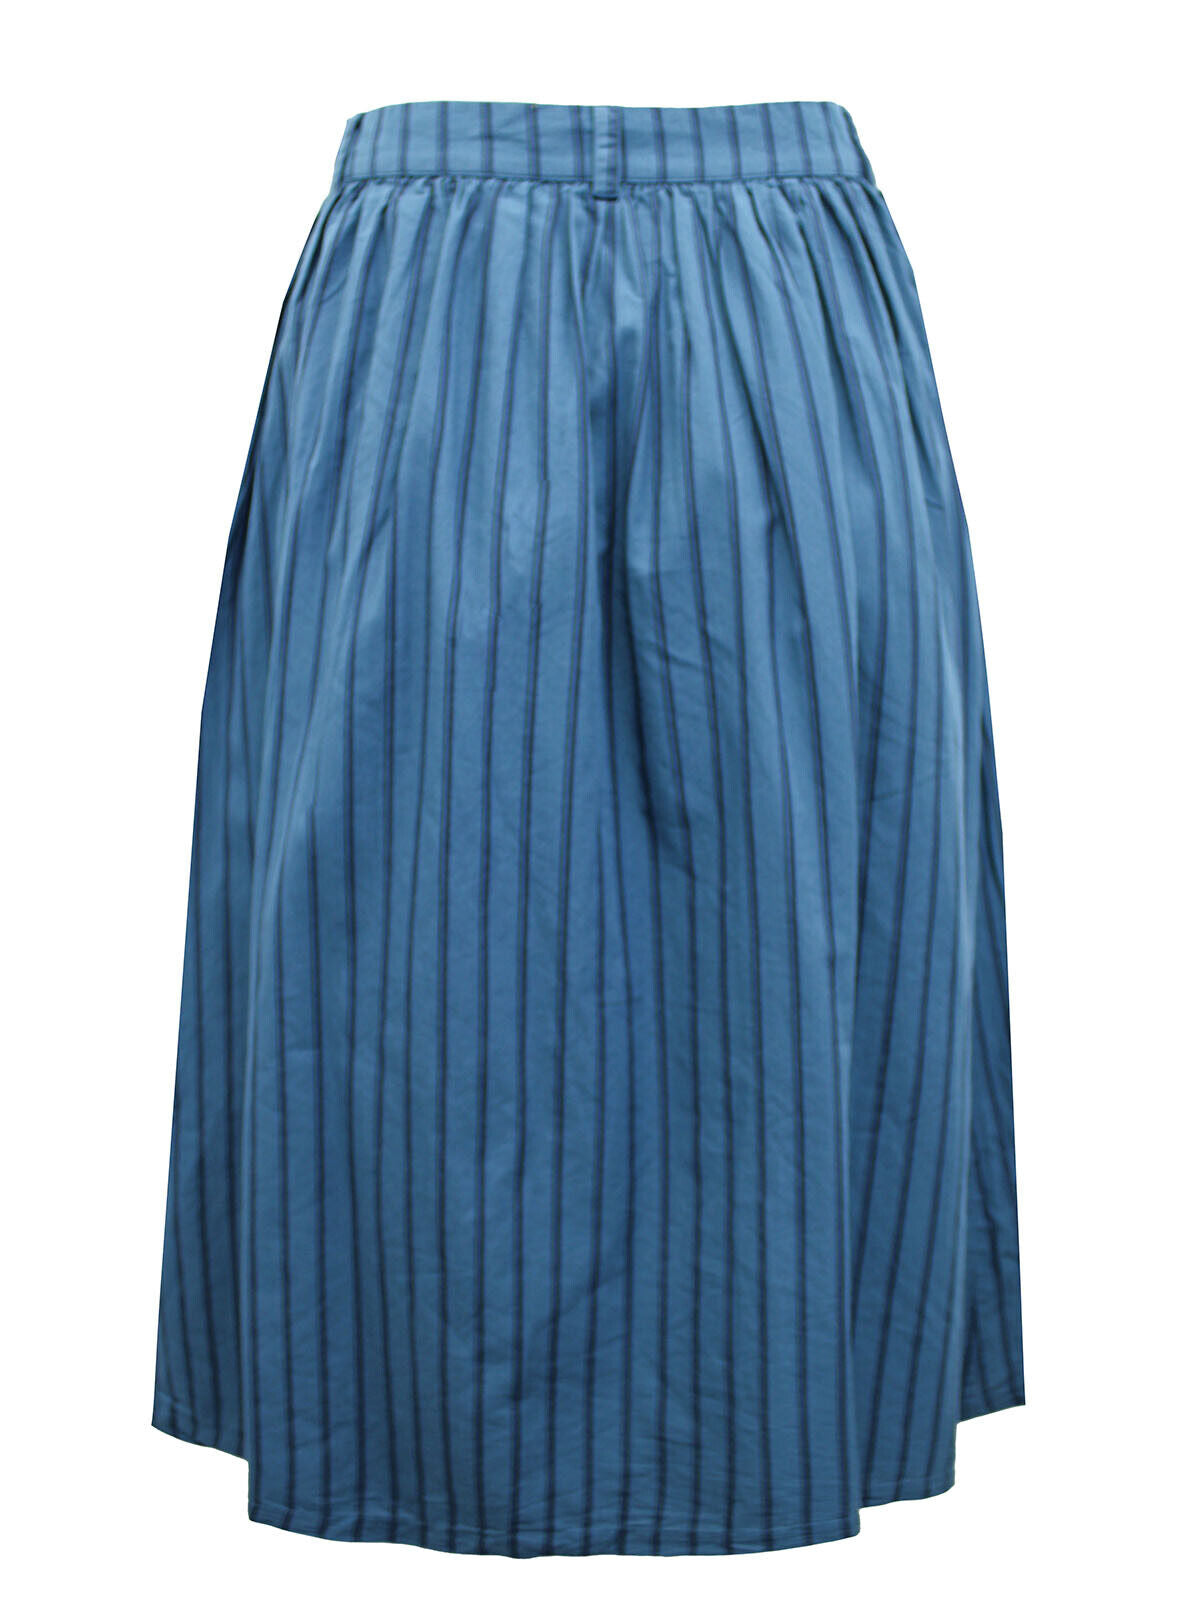 EX SEASALT Teal Stripe Swell Art Colony Skirt Sizes 10, 14, 16, 18, 20 RRP £65